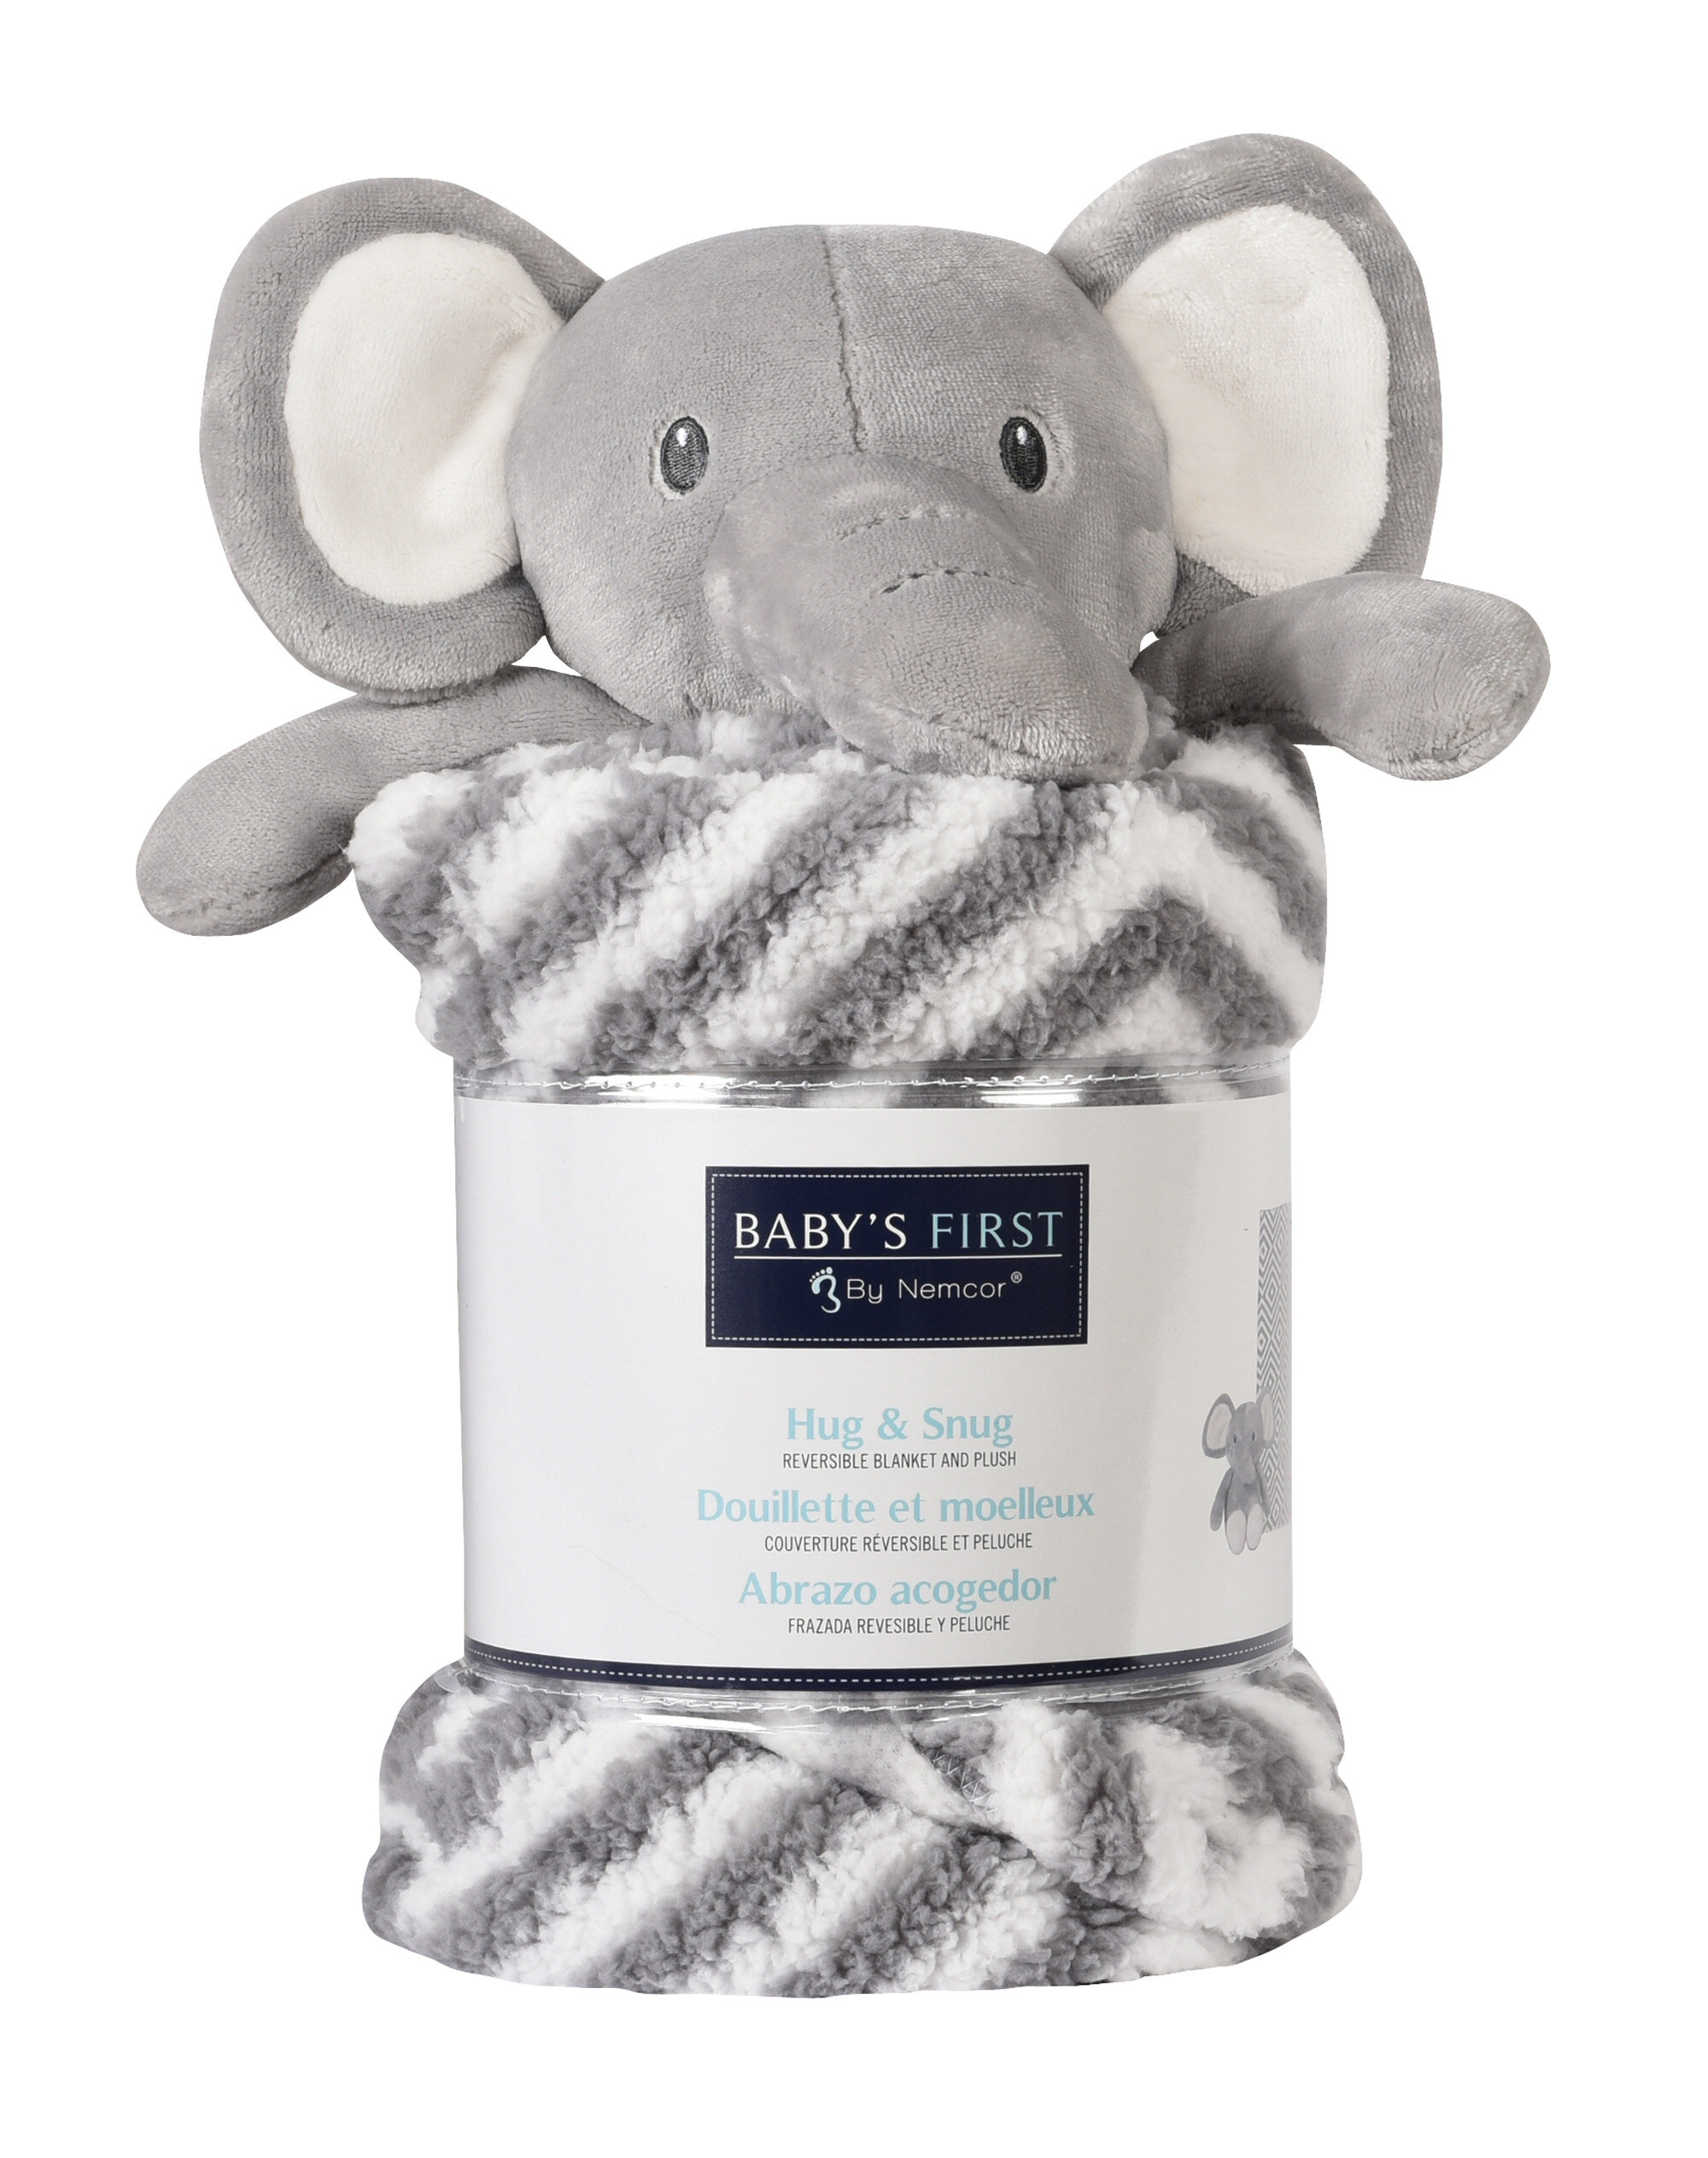 elephant plush toy for baby